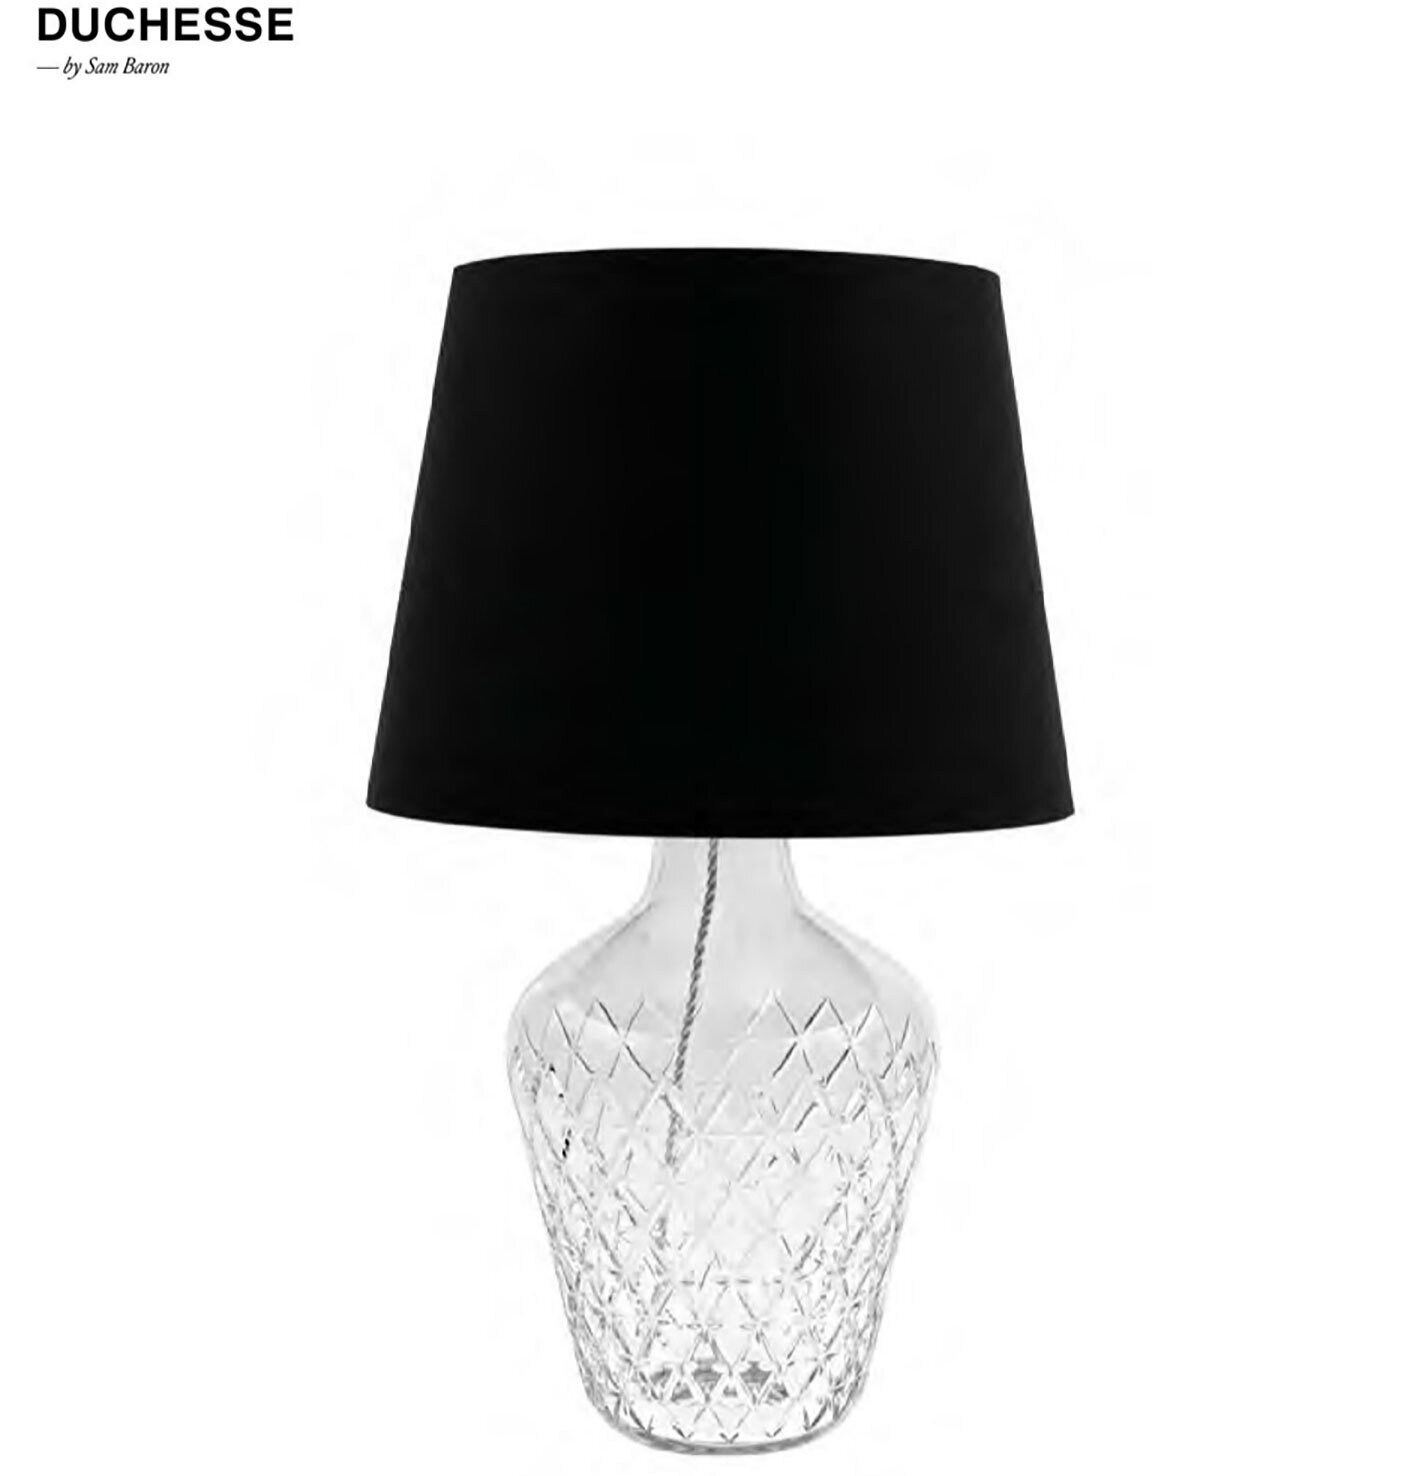 Vista Alegre Duchesse Table Lamp 48002318